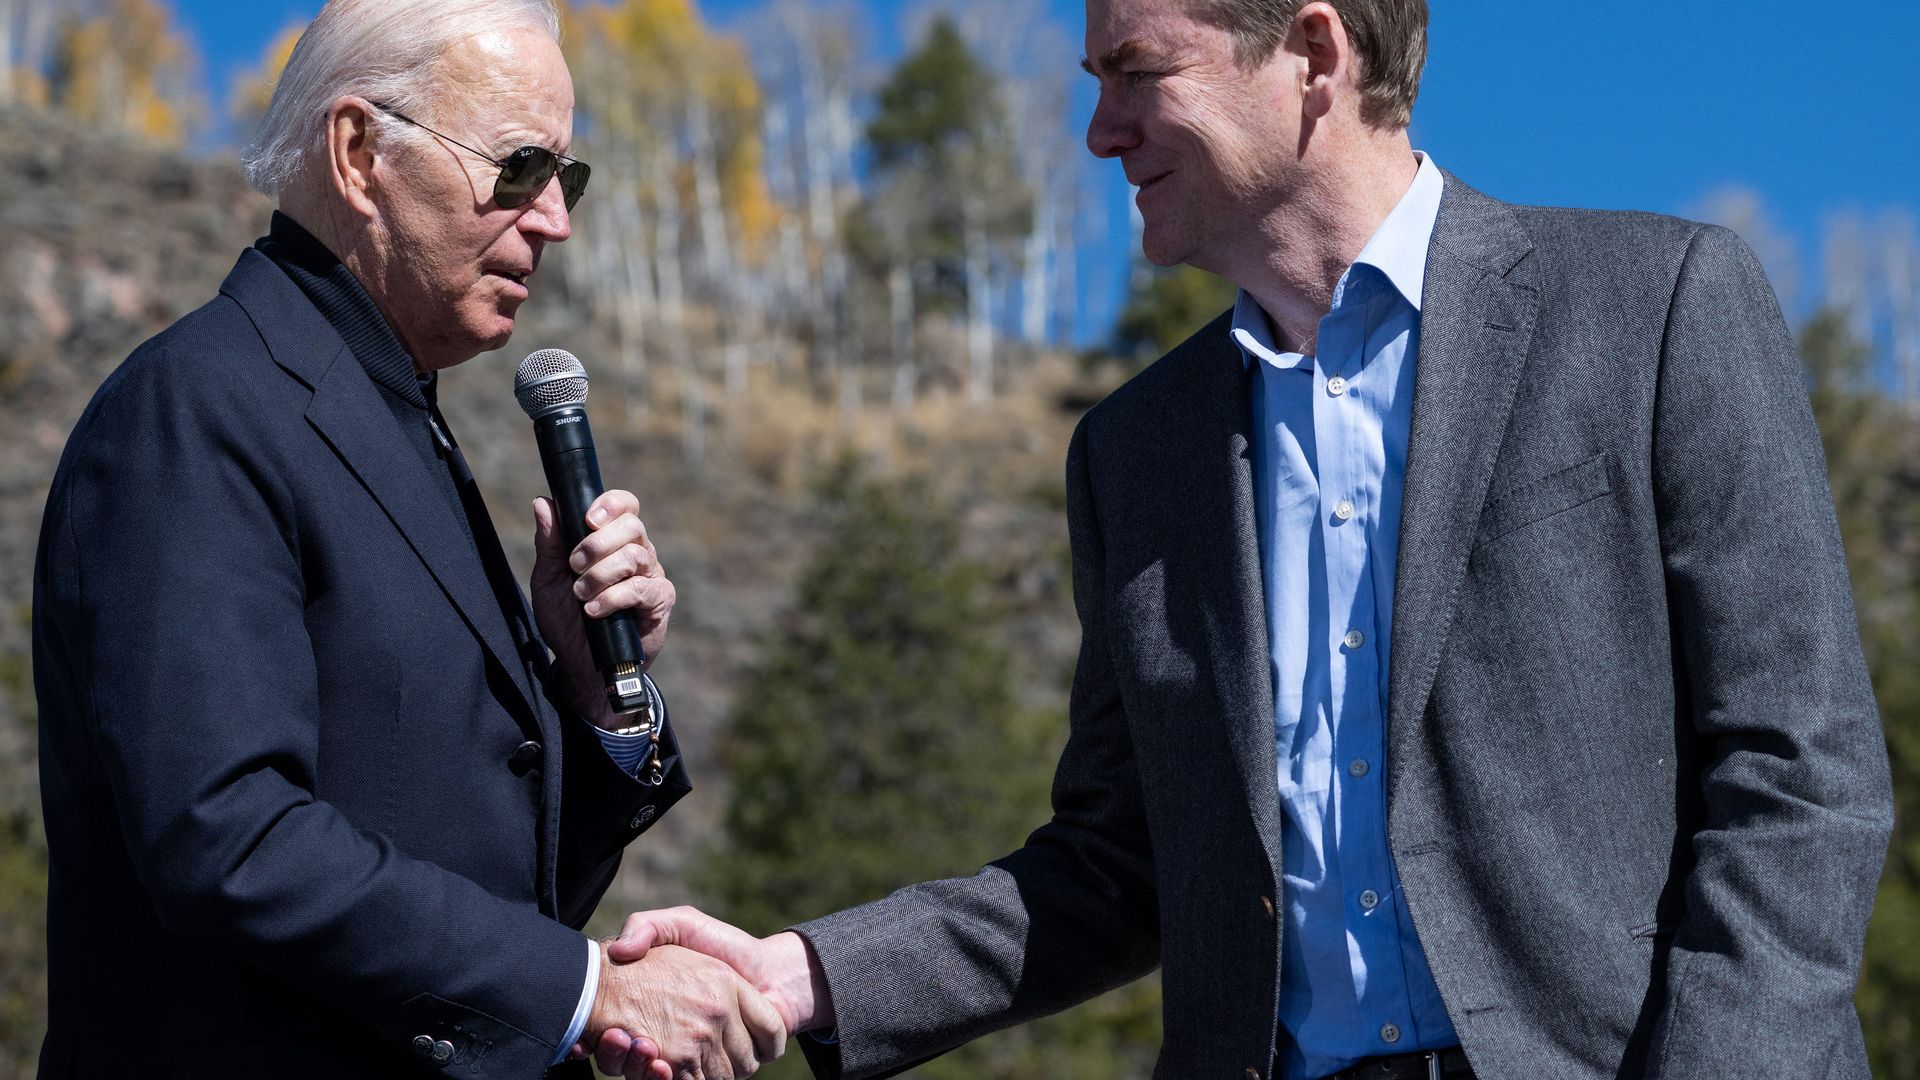 President Biden shakes hands with U.S. Senator Michael Bennet at Camp Hale near Leadville on Oct. 12. Photo: Saul Loeb/AFP via Getty Images